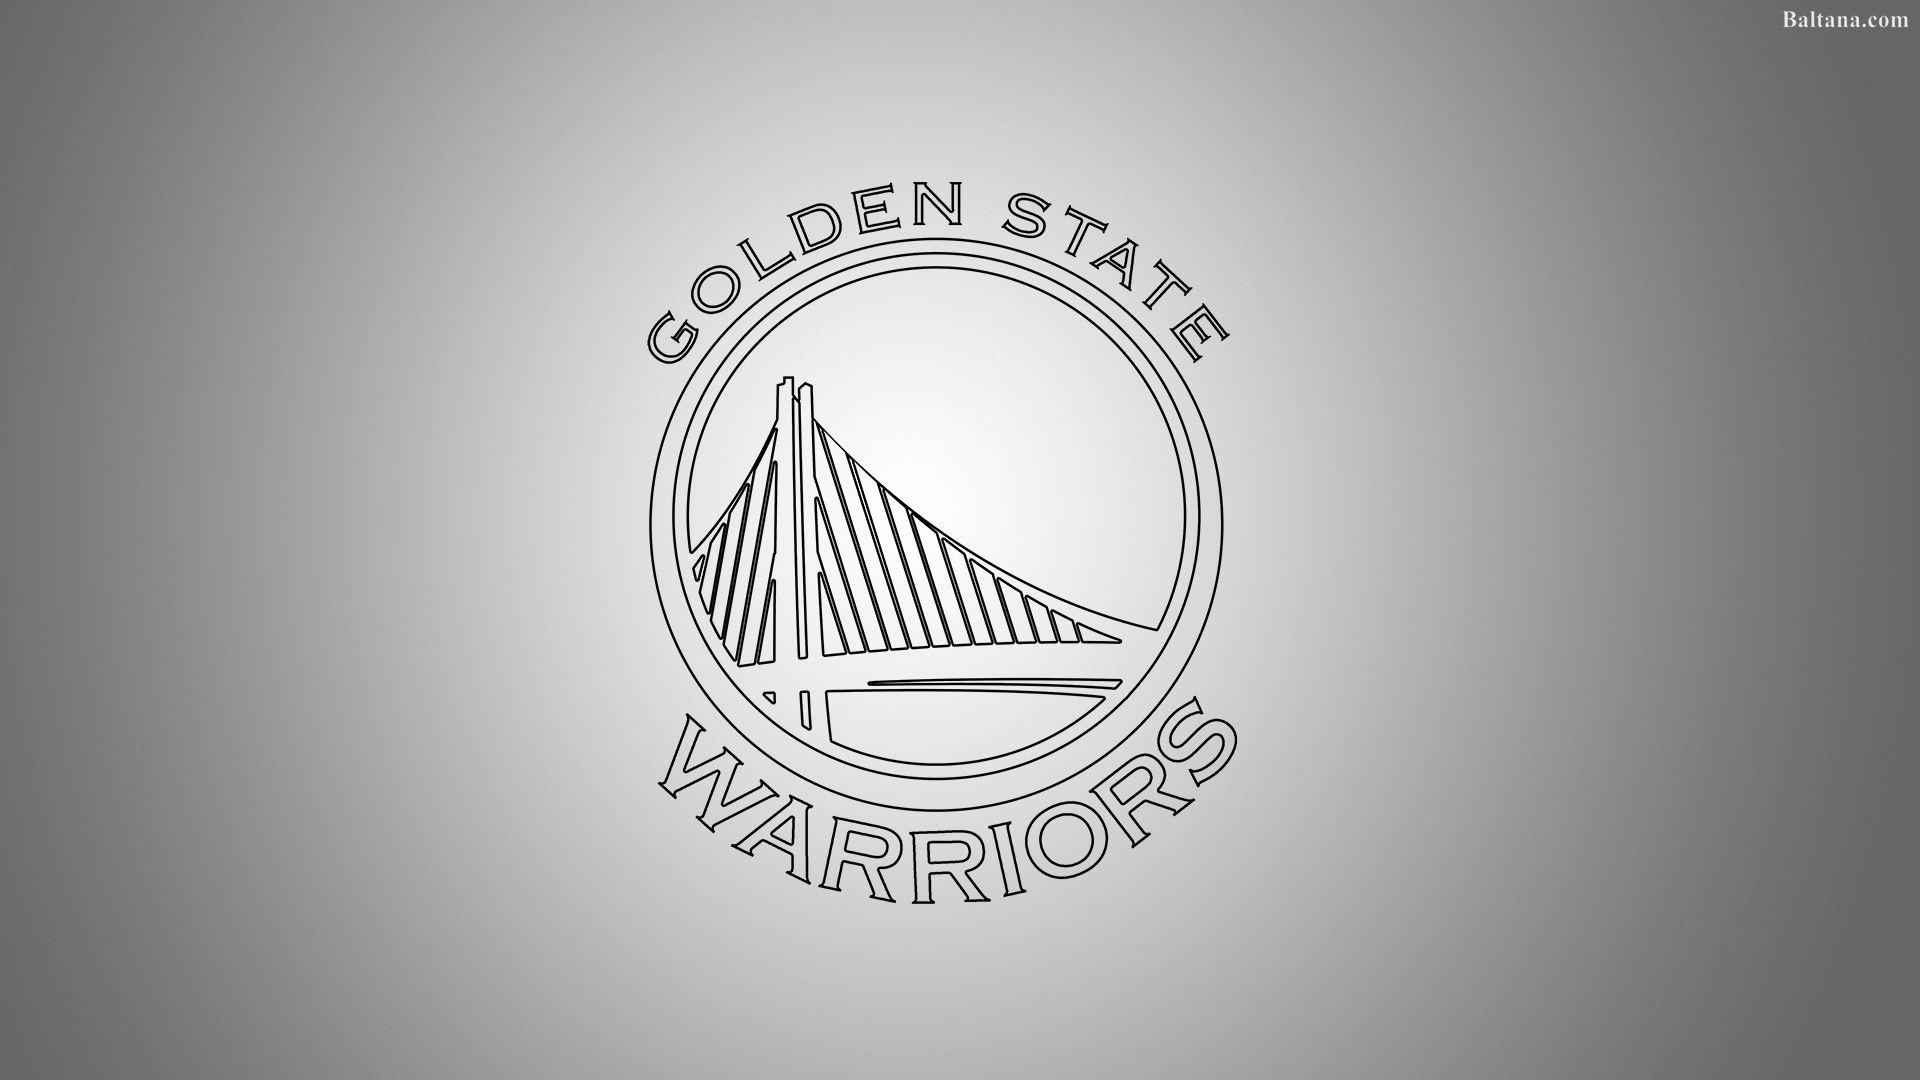 HD Golden State Warriors Wallpapers - Wallpaper Cave